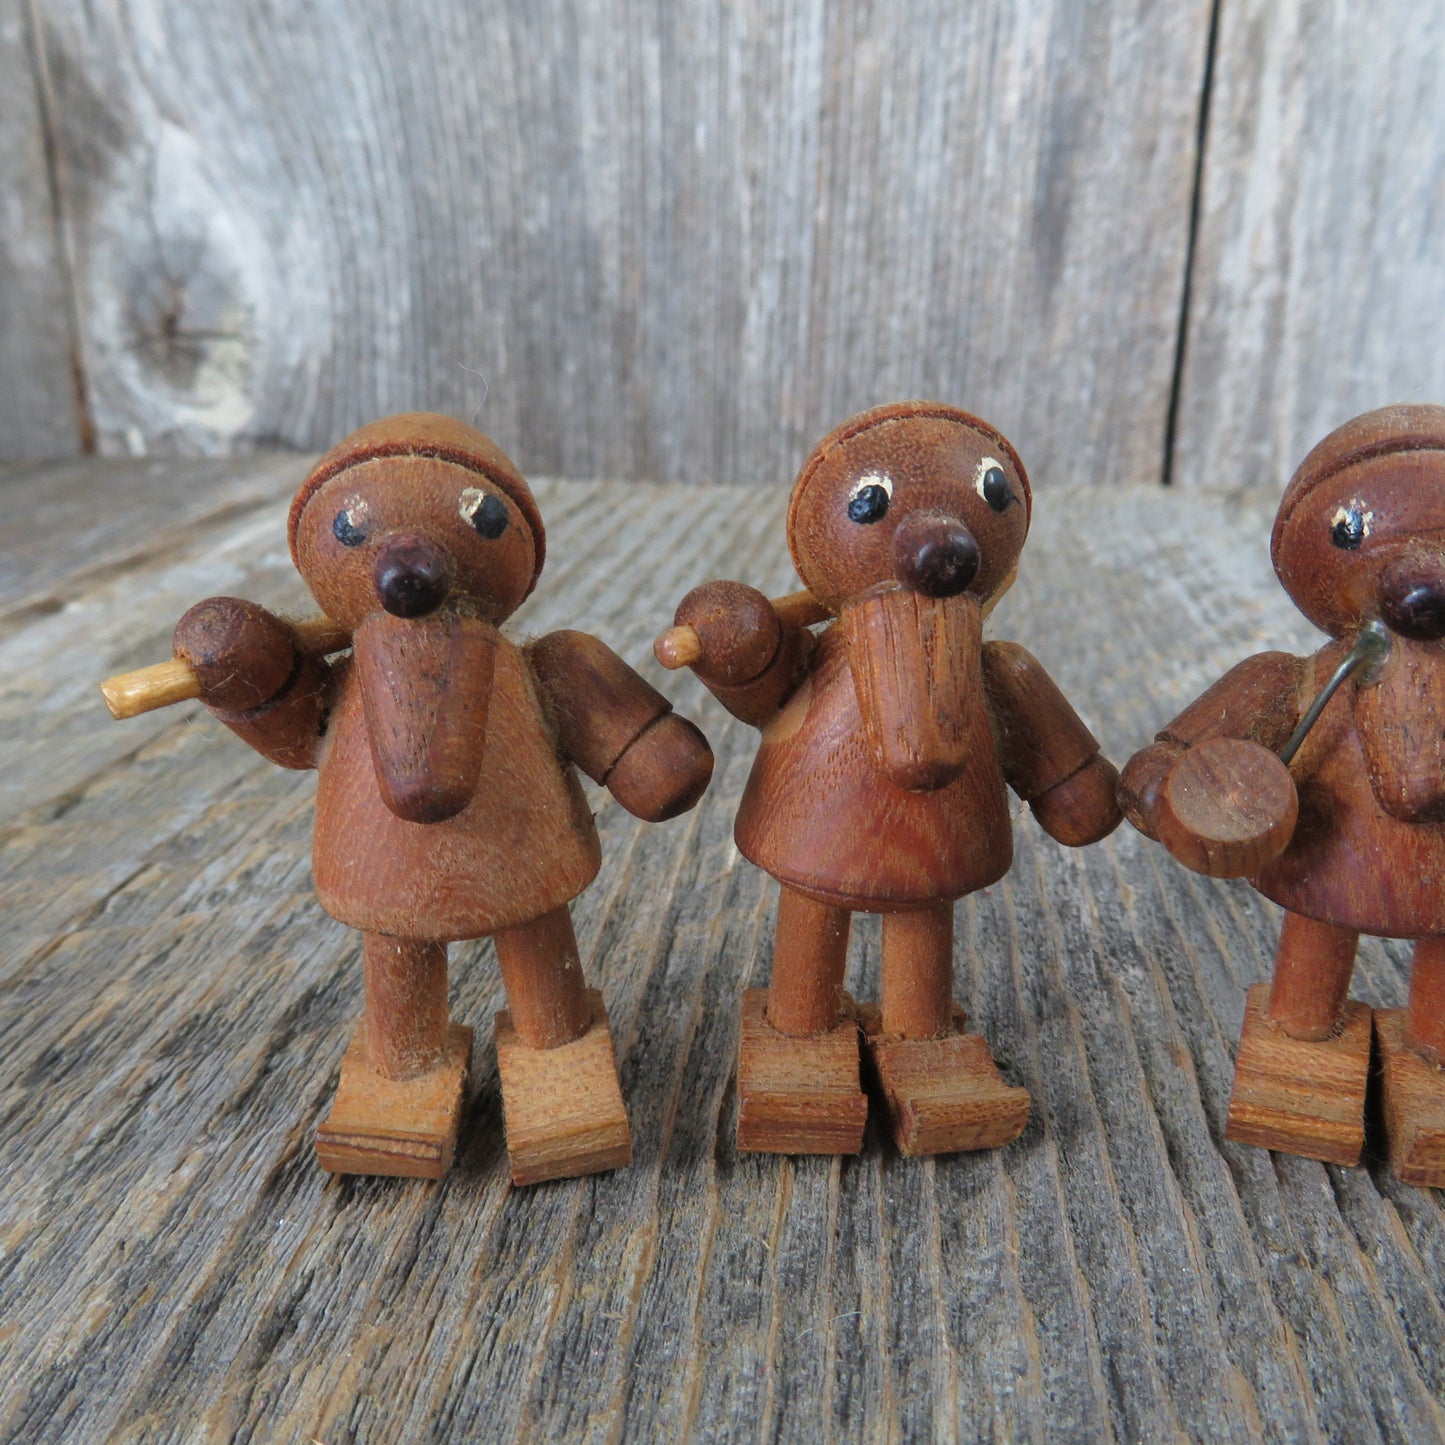 Vintage Wooden Gnome Elf Figurine Set of 4 Pipe Pail Ax Walking Stick Natural Wood Color Fairy Village Figures Miniature